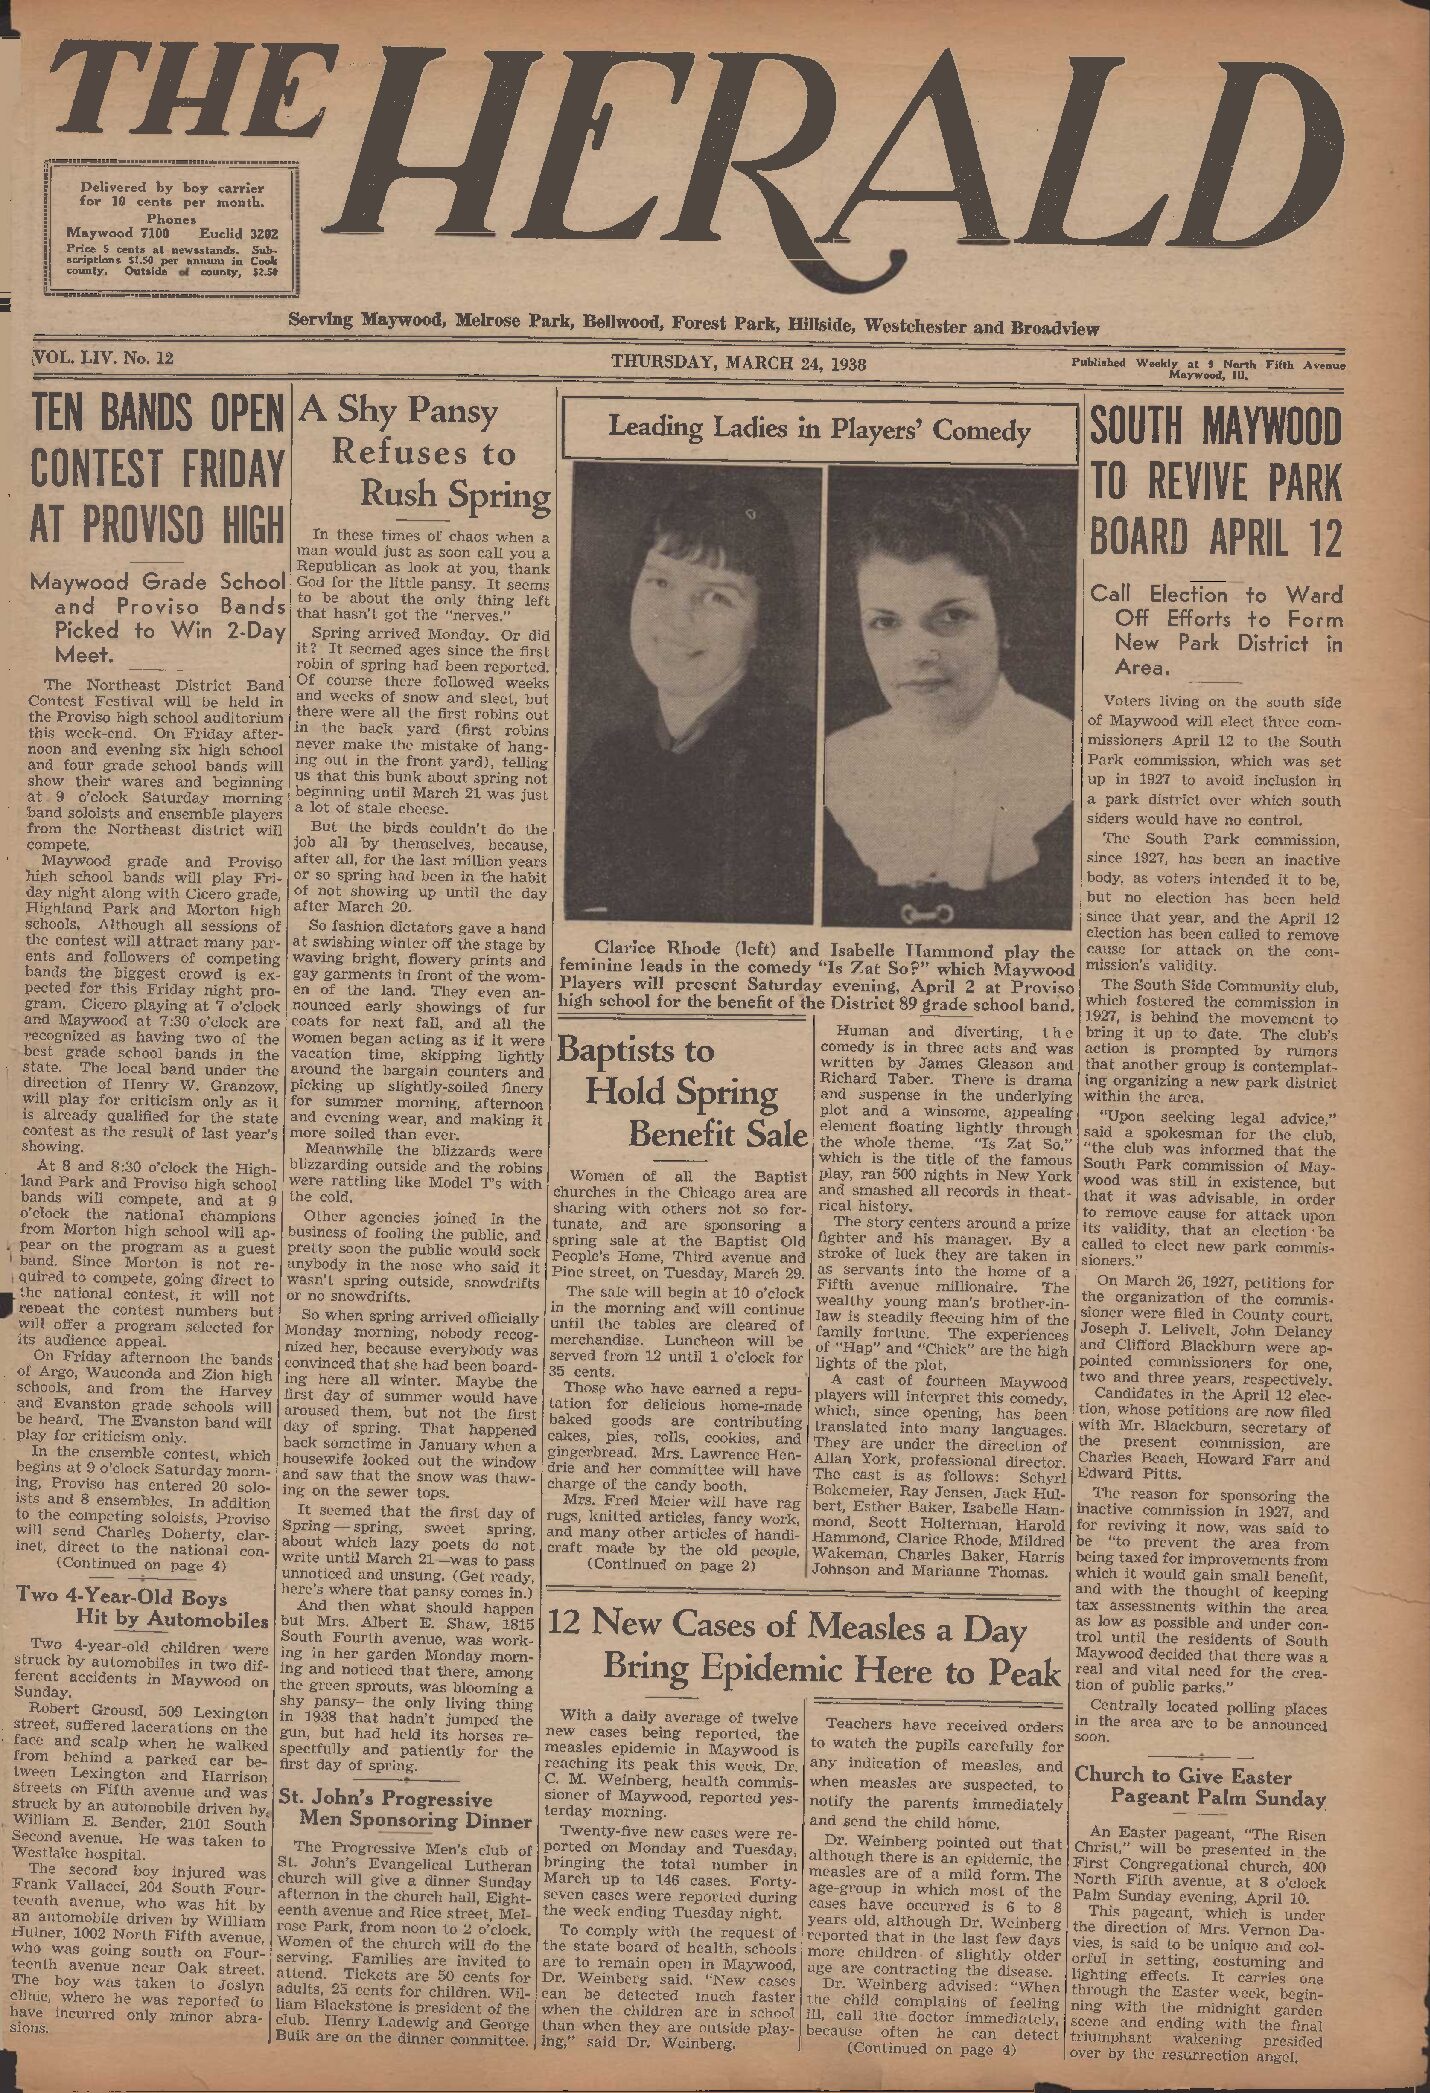 The Herald – 19380324